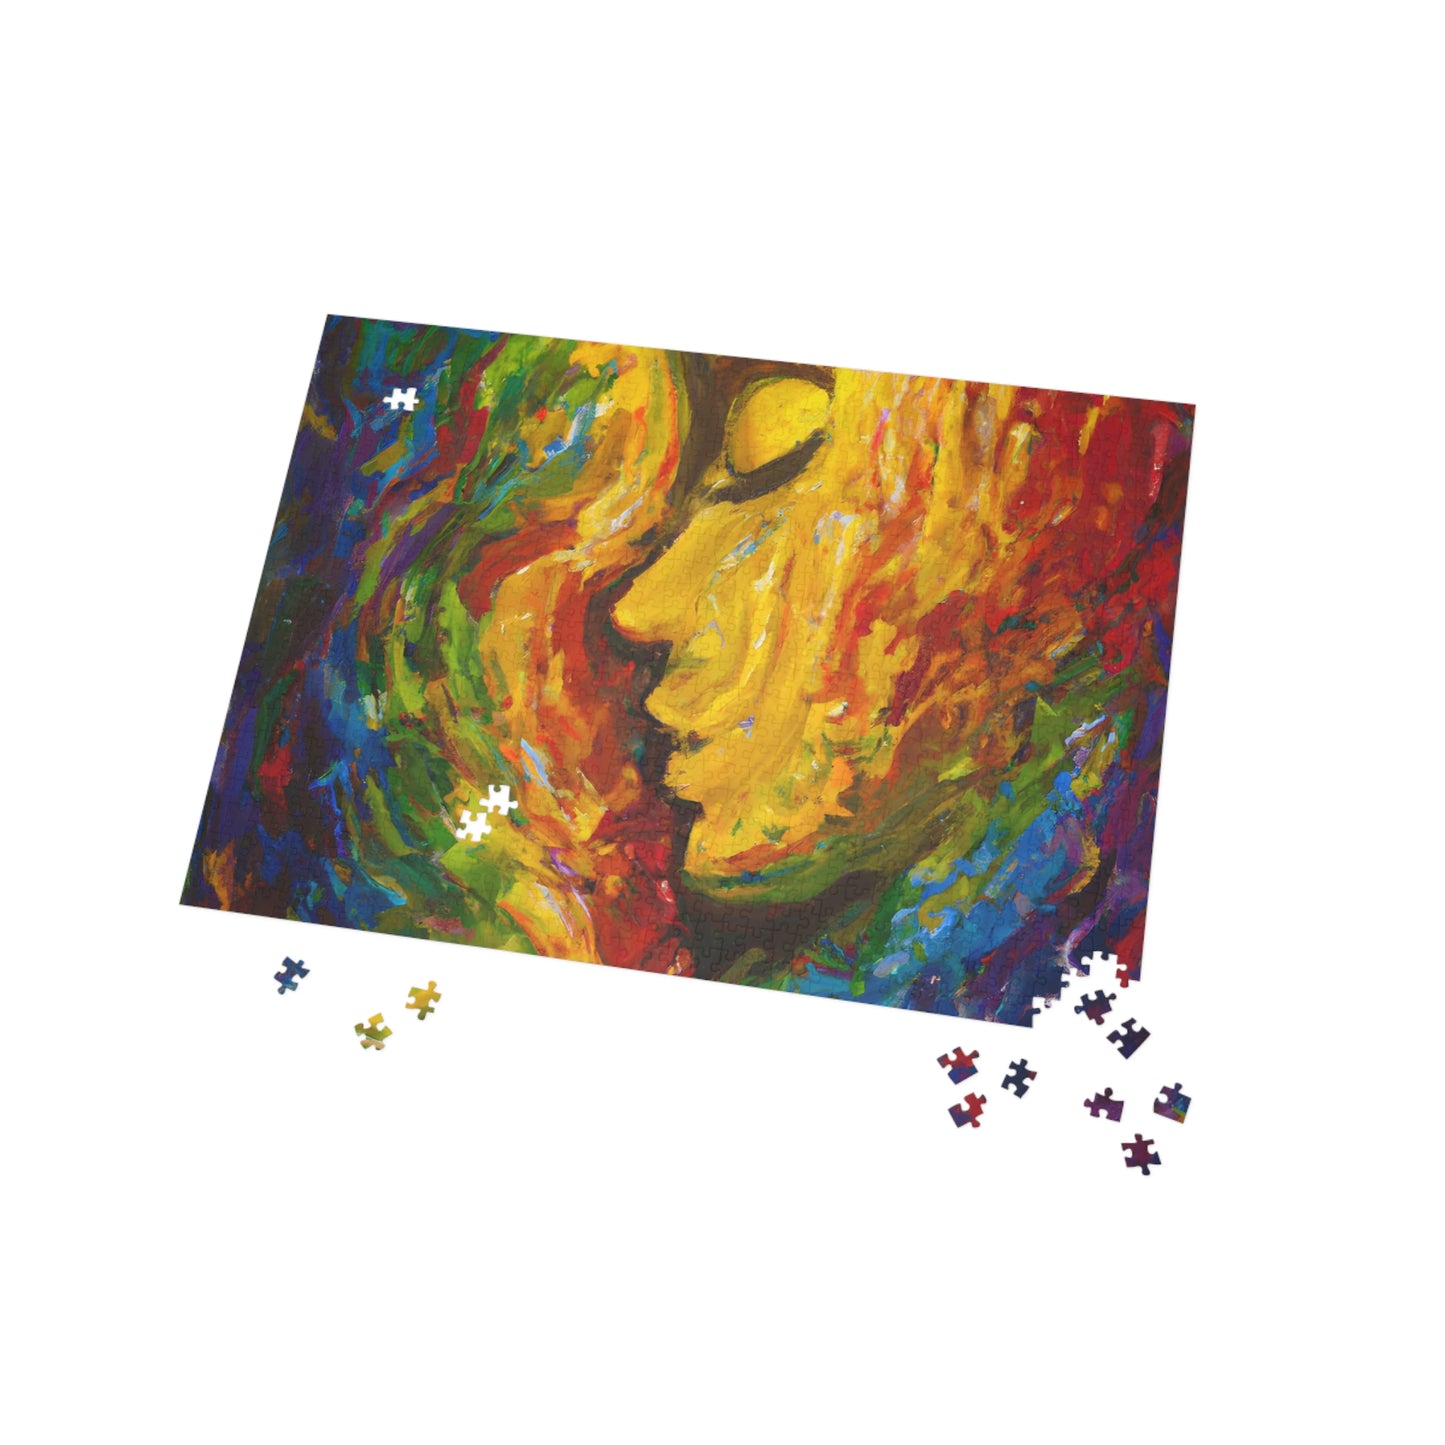 AdoraVinci - LGBTQ-Inspired Jigsaw Puzzle